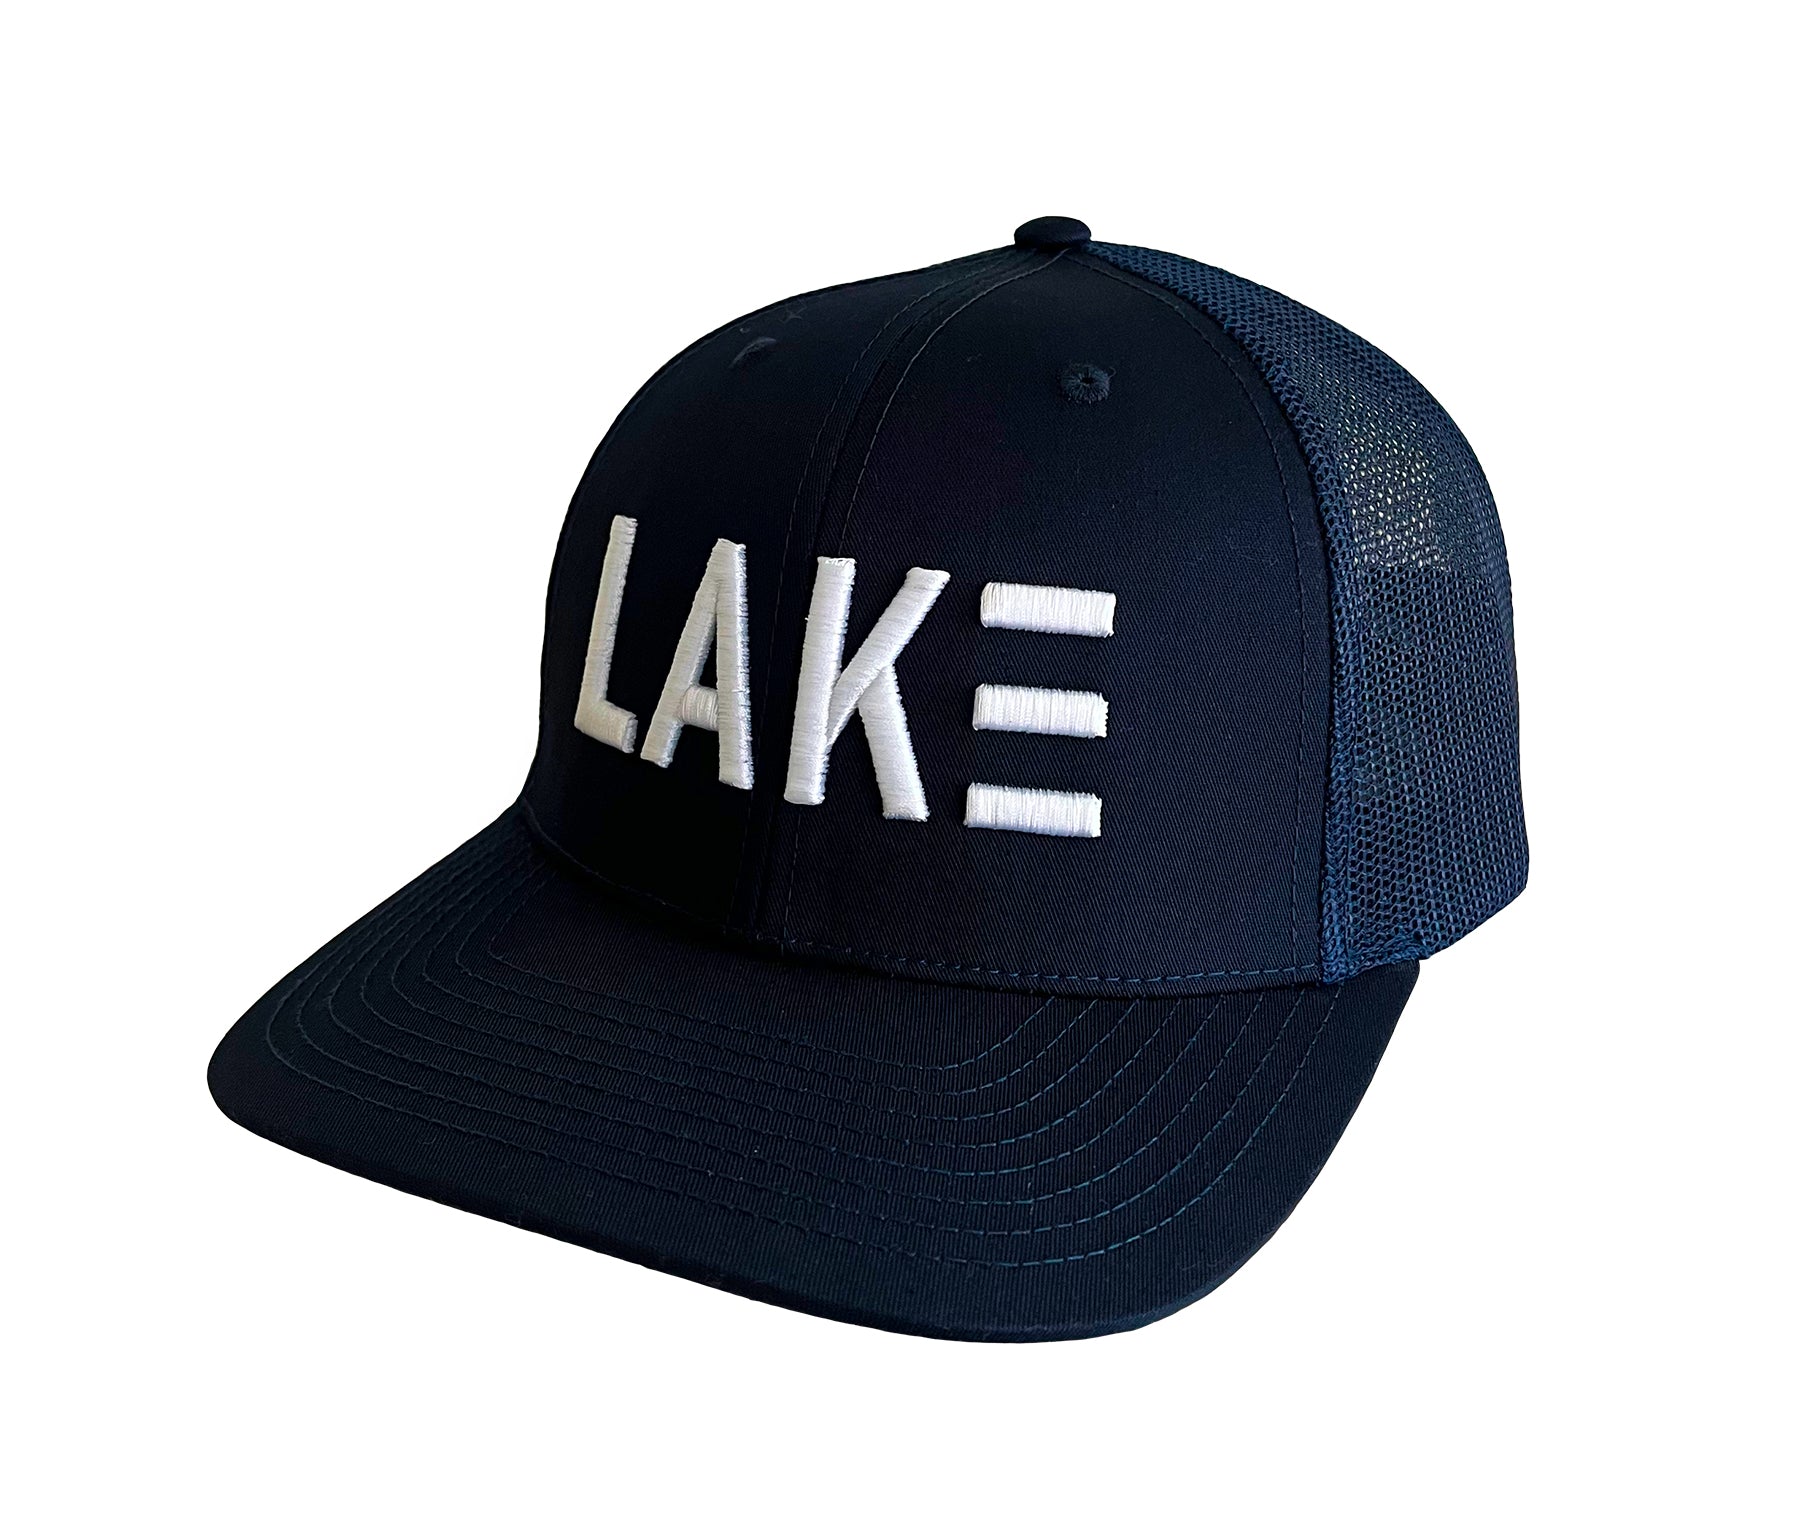 The Lake – No Wake® Lifestyle